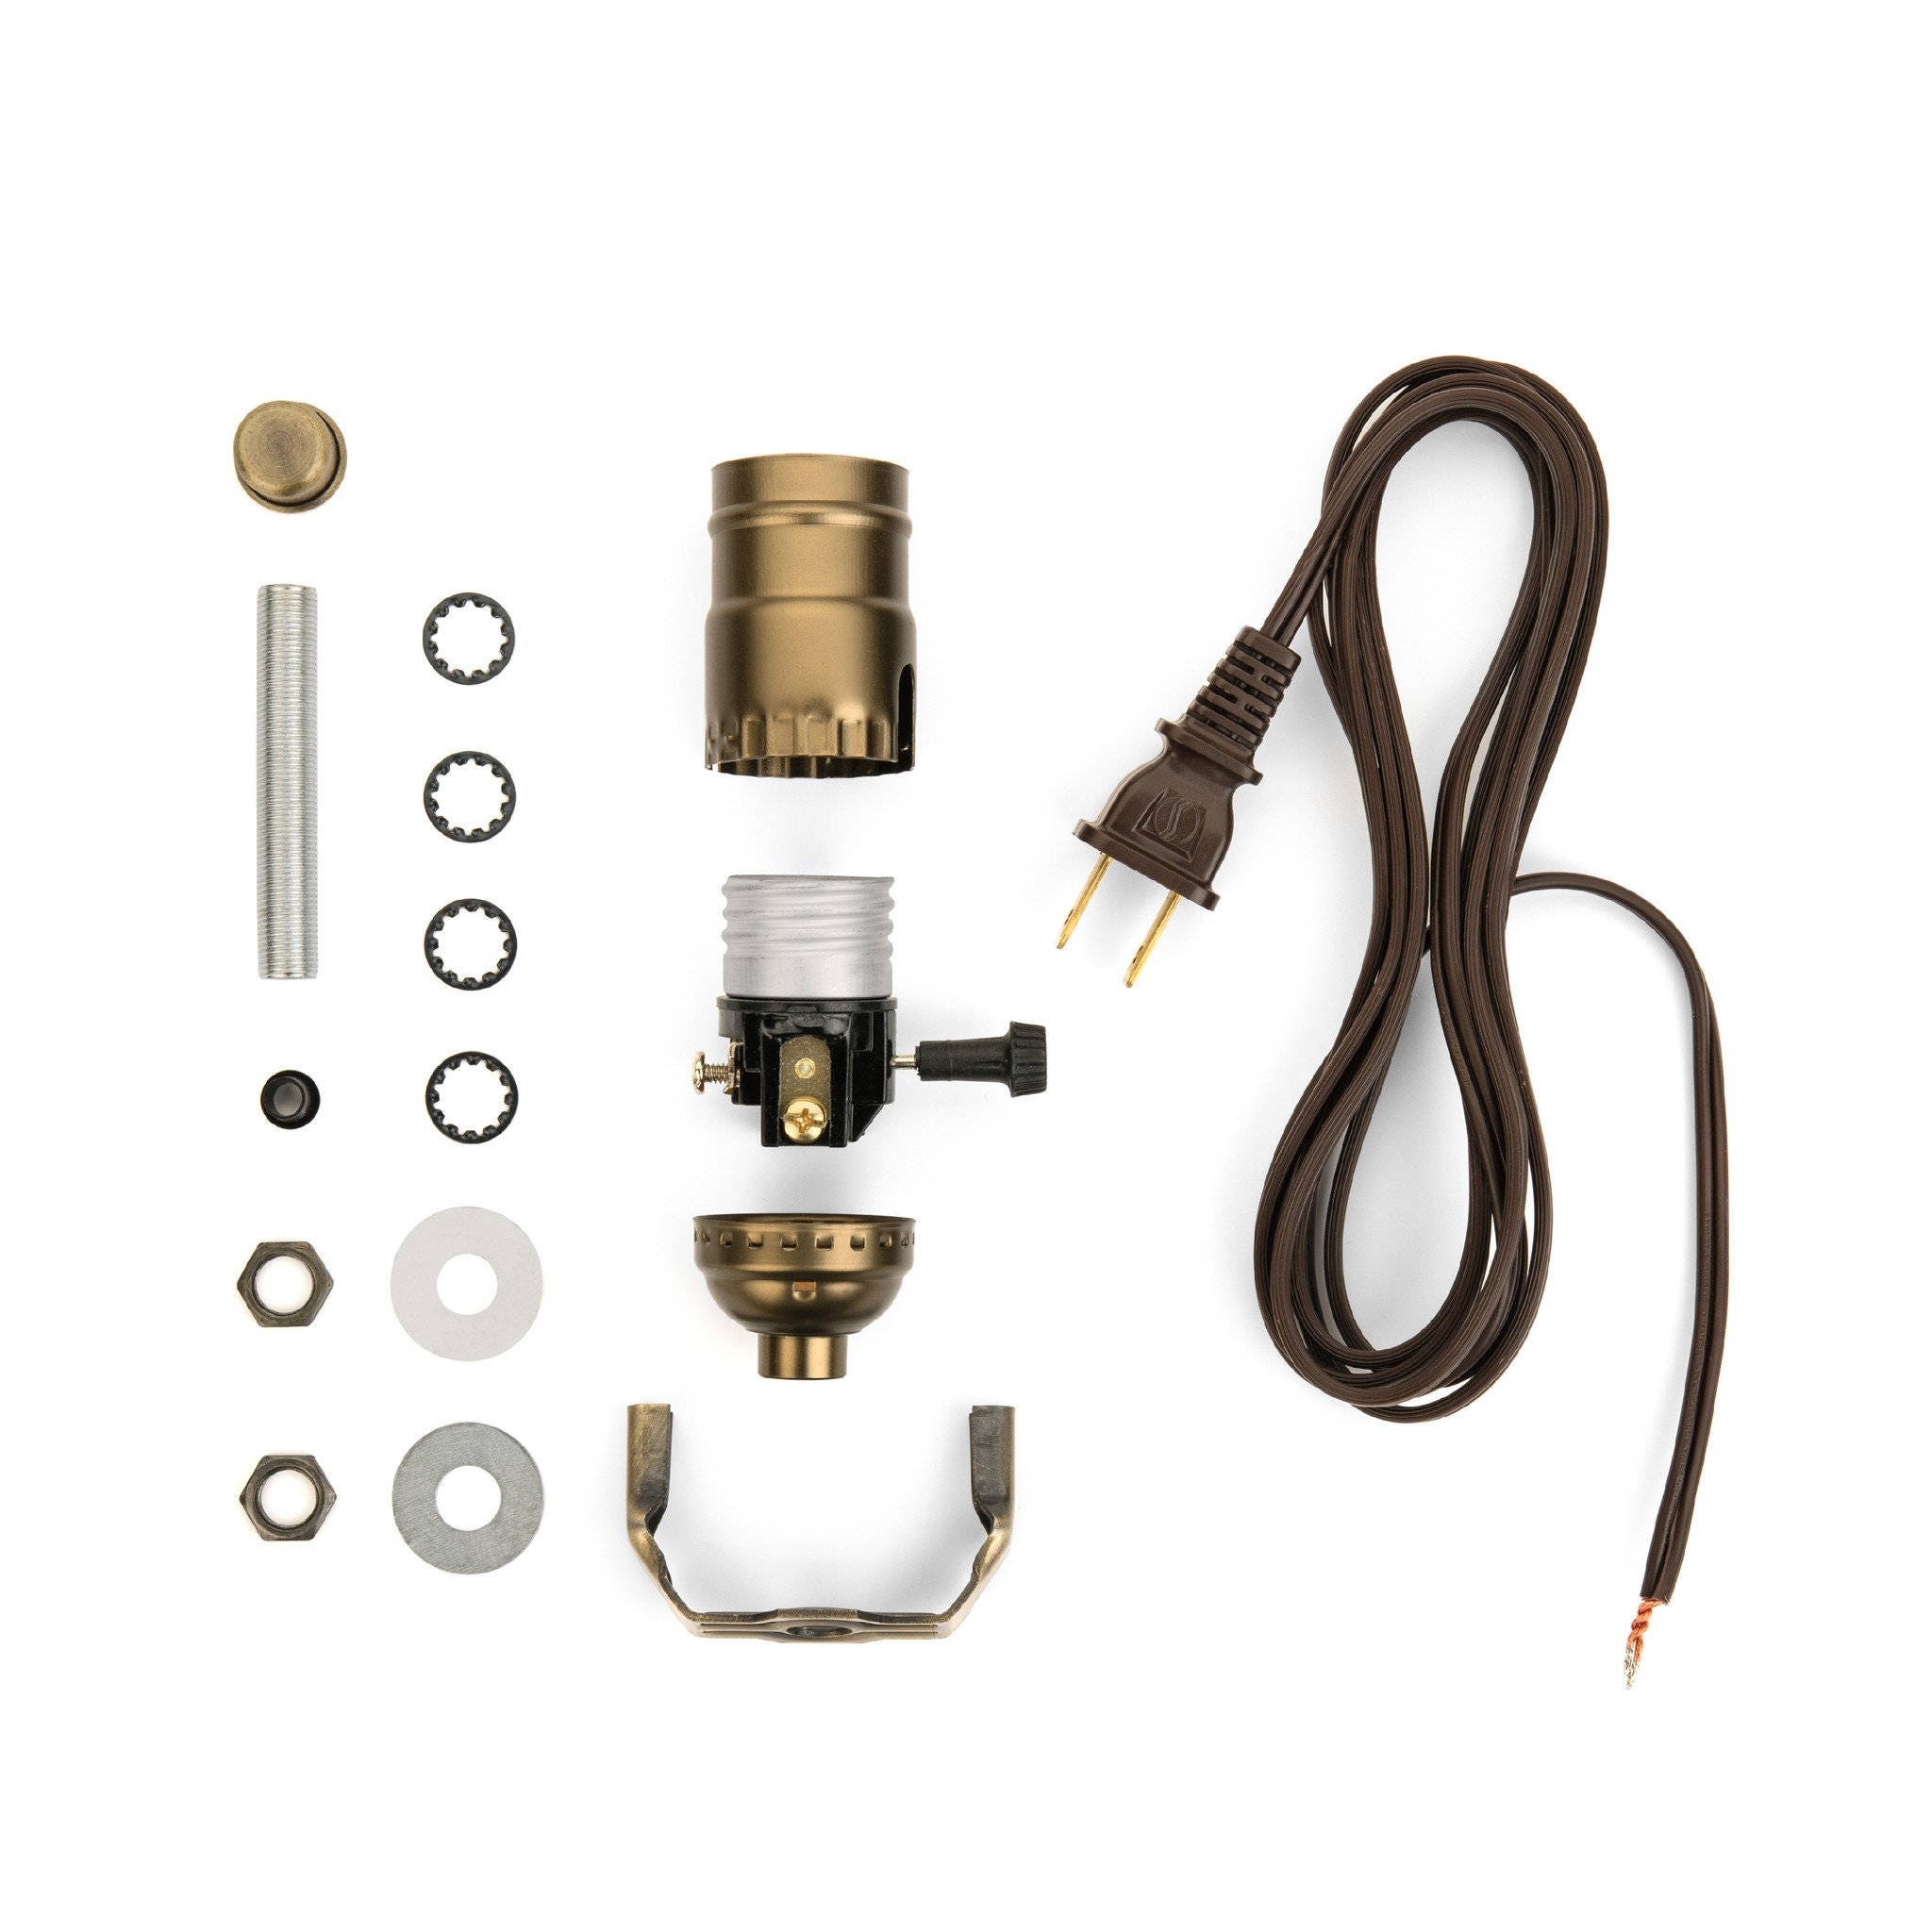 DIY Lamp Wiring Kit (Silver Socket & Silver Cord) - Makely